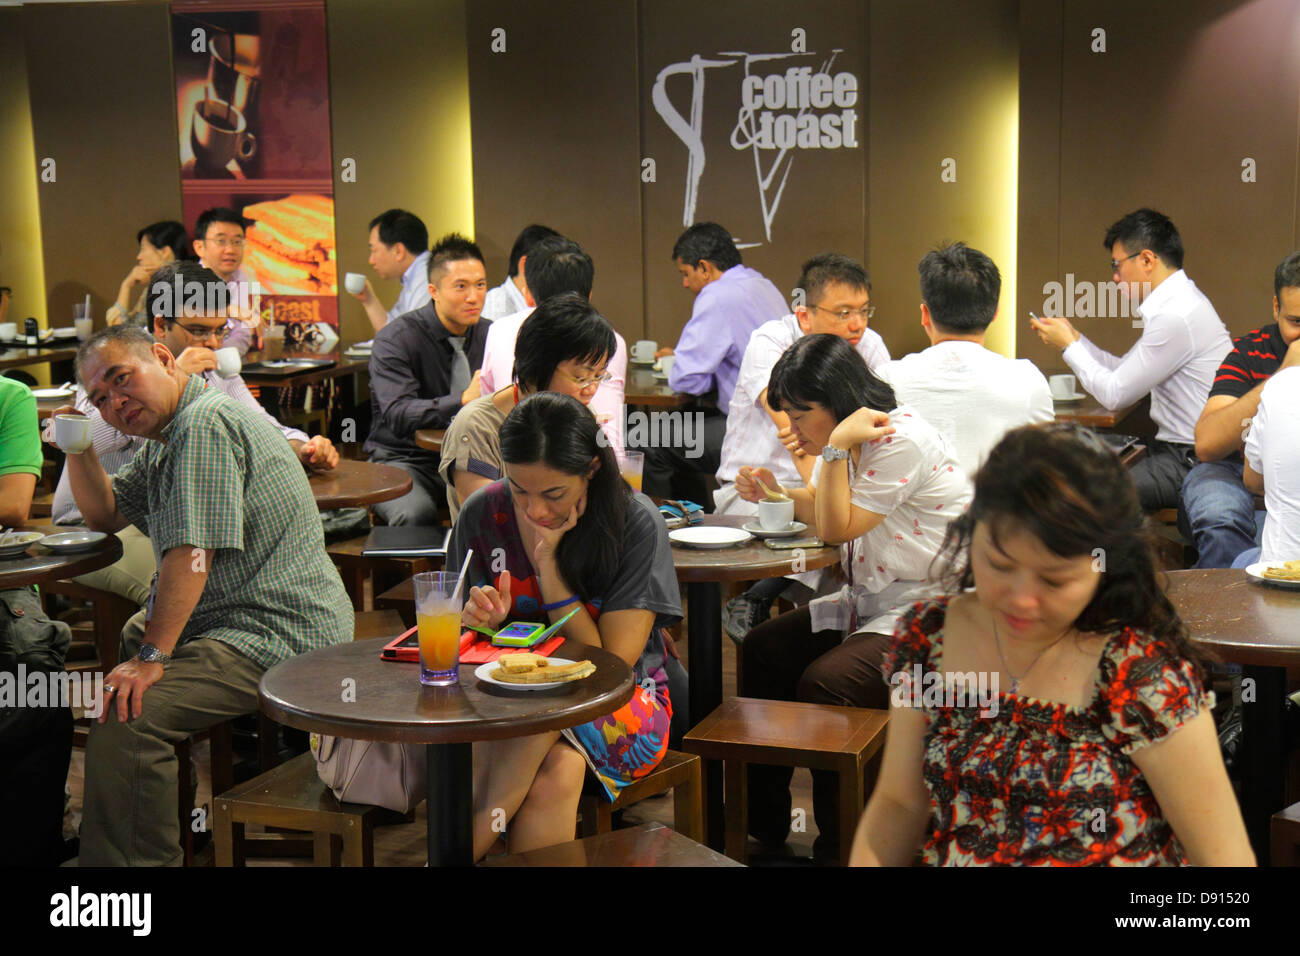 Singapore One Raffles Place, caffe' e toast, cafe', ristorante, ristoranti, ristoranti, ristoranti, cafe', caffe', uomini uomini asiatici, donne donne, interni interni, si Foto Stock